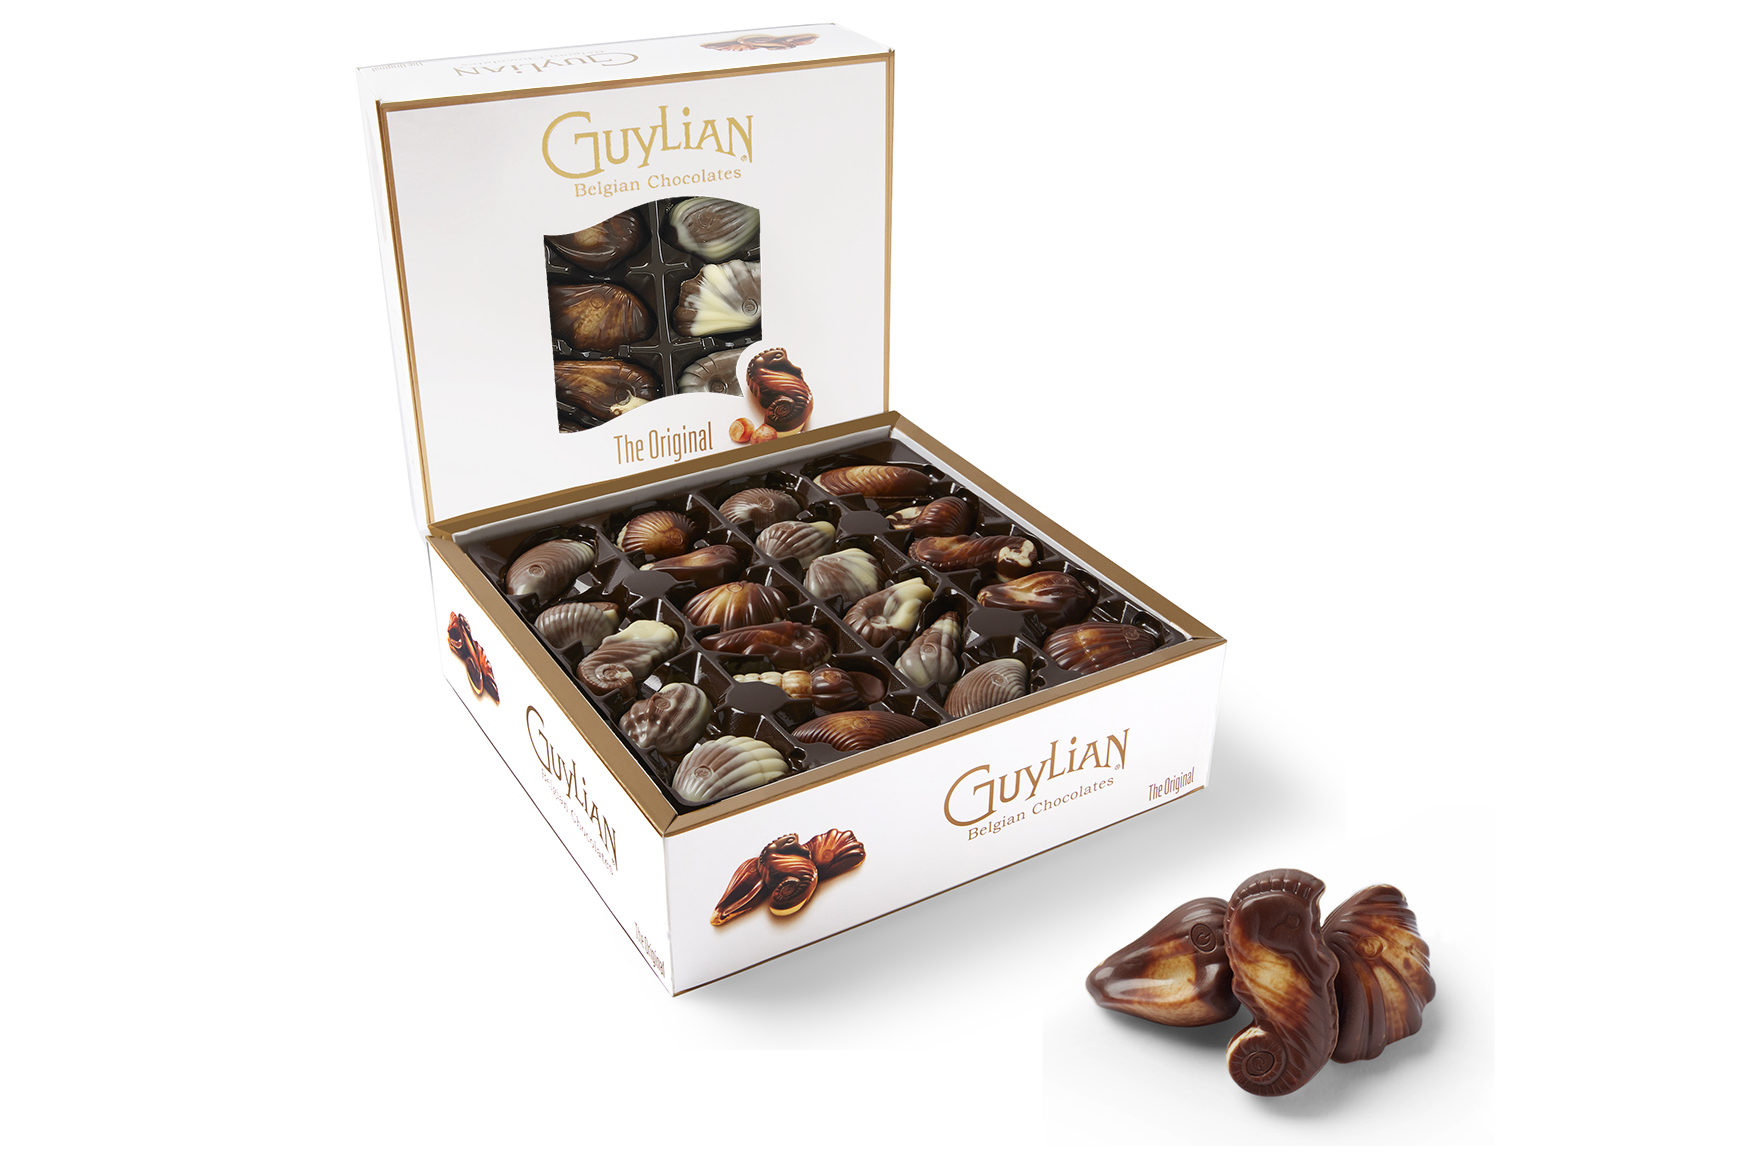 Guylian Chocolate Brands in India